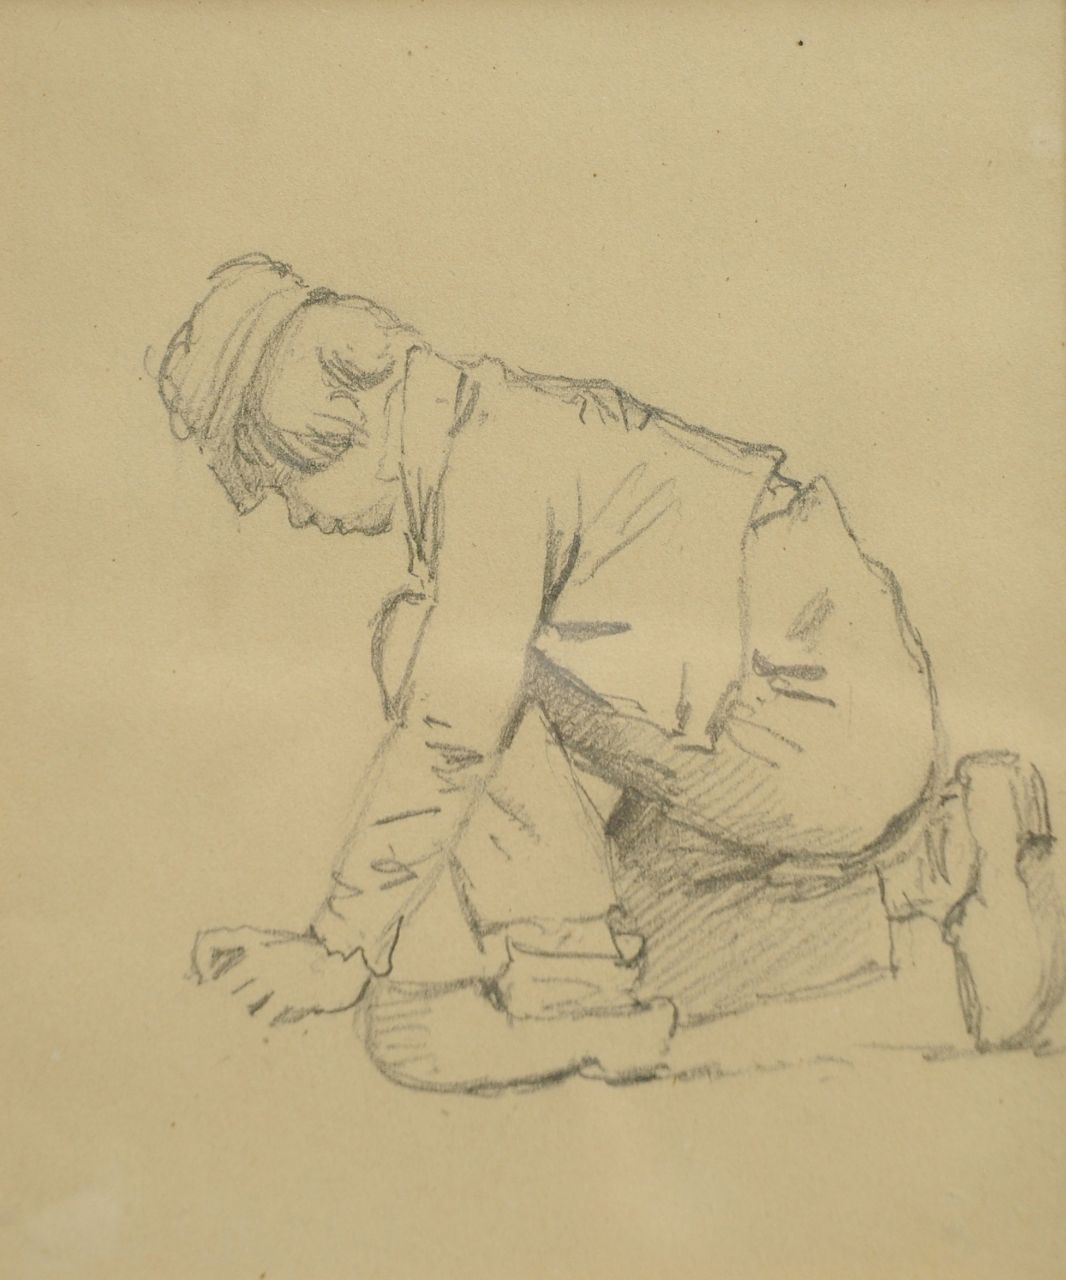 Koekkoek B.C.  | Barend Cornelis Koekkoek, Study of a country boy, chalk on paper 12.8 x 10.2 cm